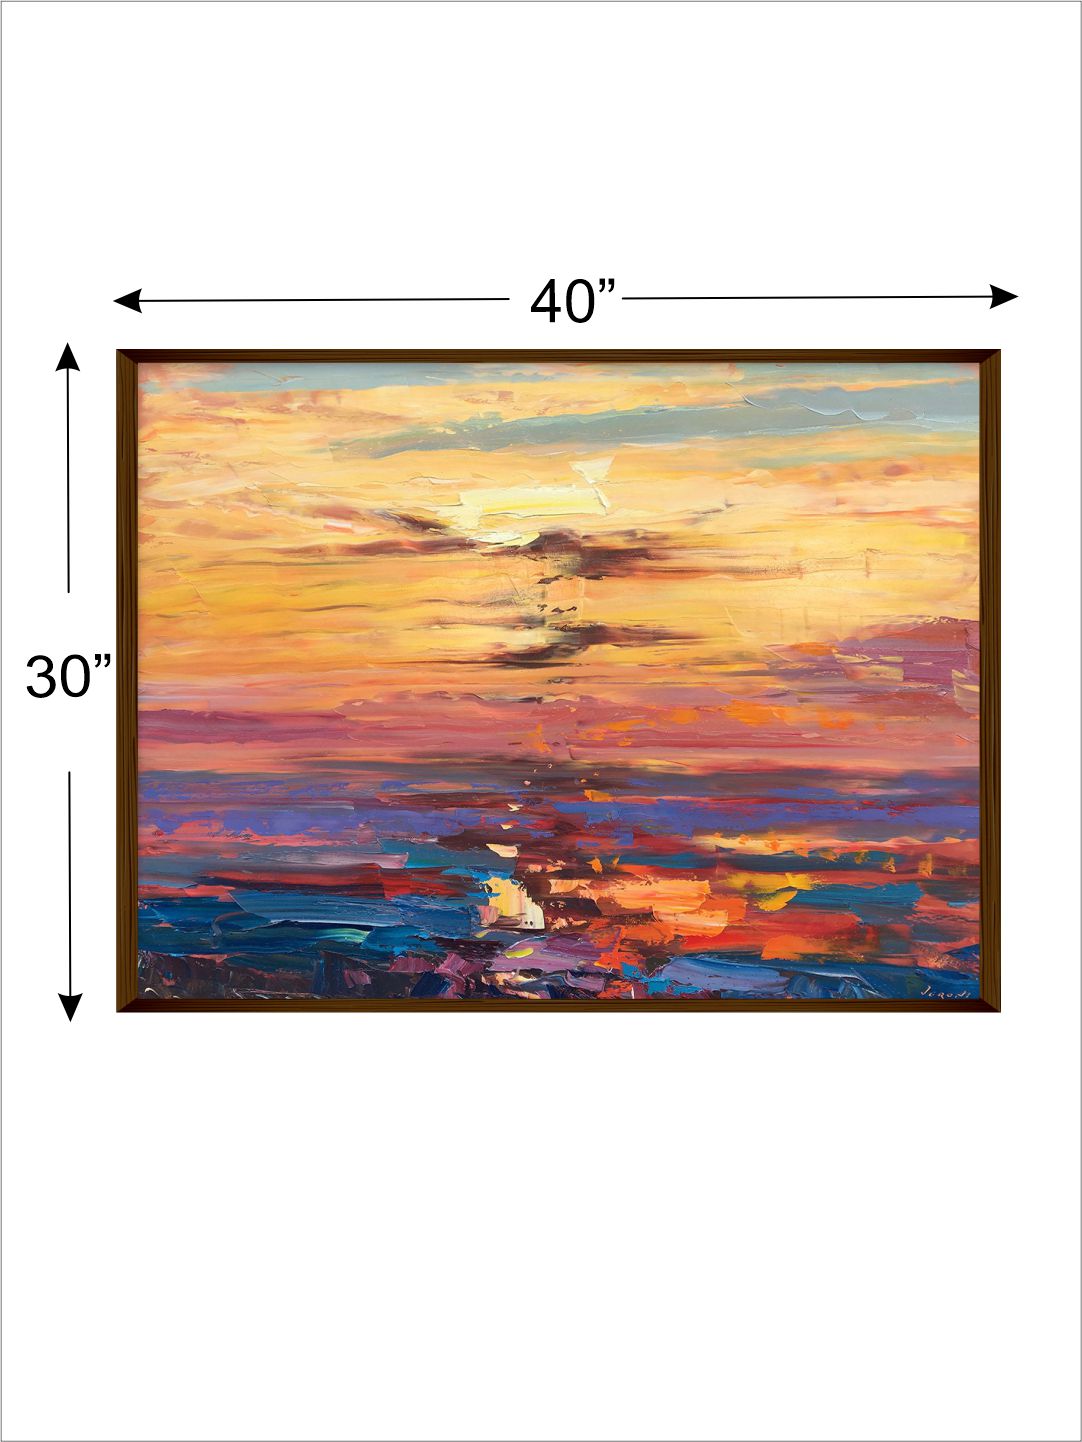 Sunset in Ocean - Wall Decor - 4